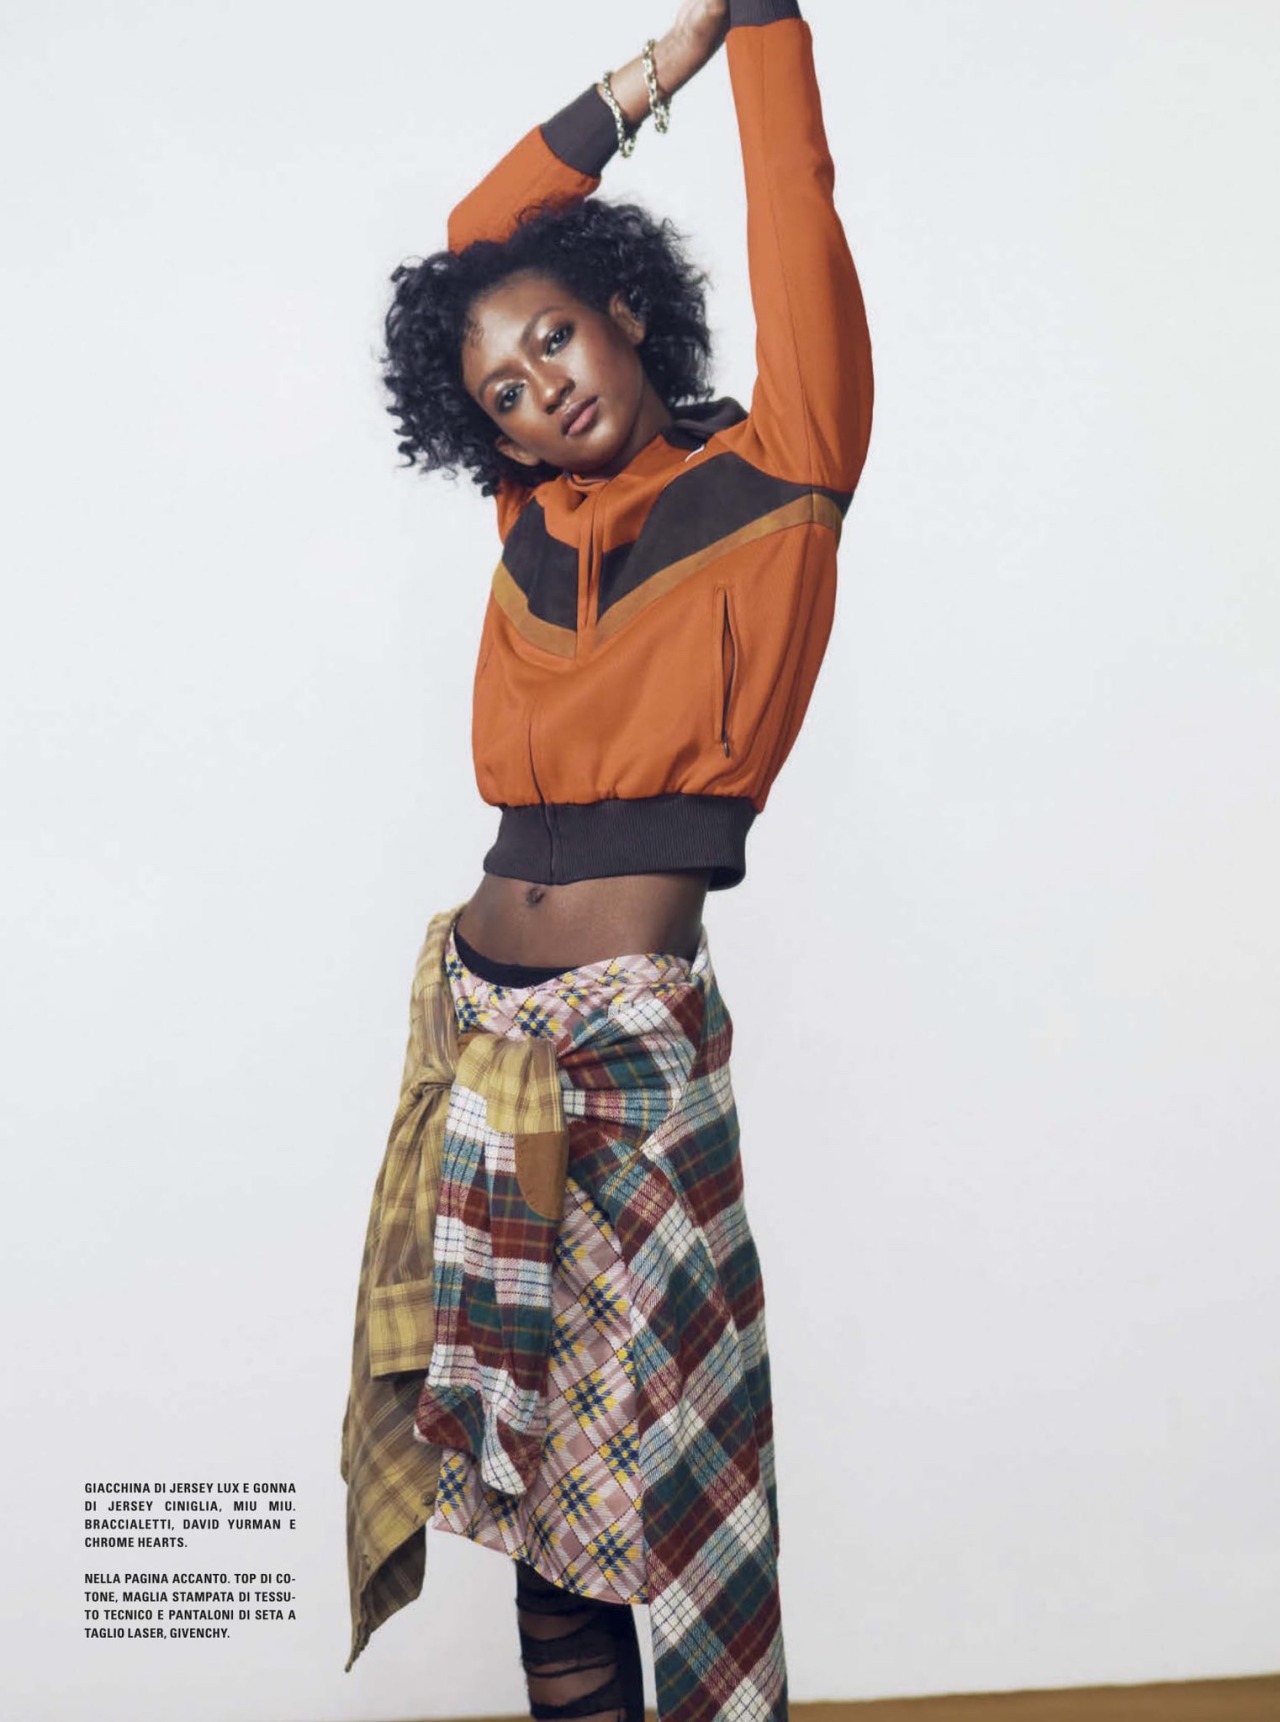 Where Fashion Brats Unite — Kaya Scodelario Covers Elle Korea August 2012